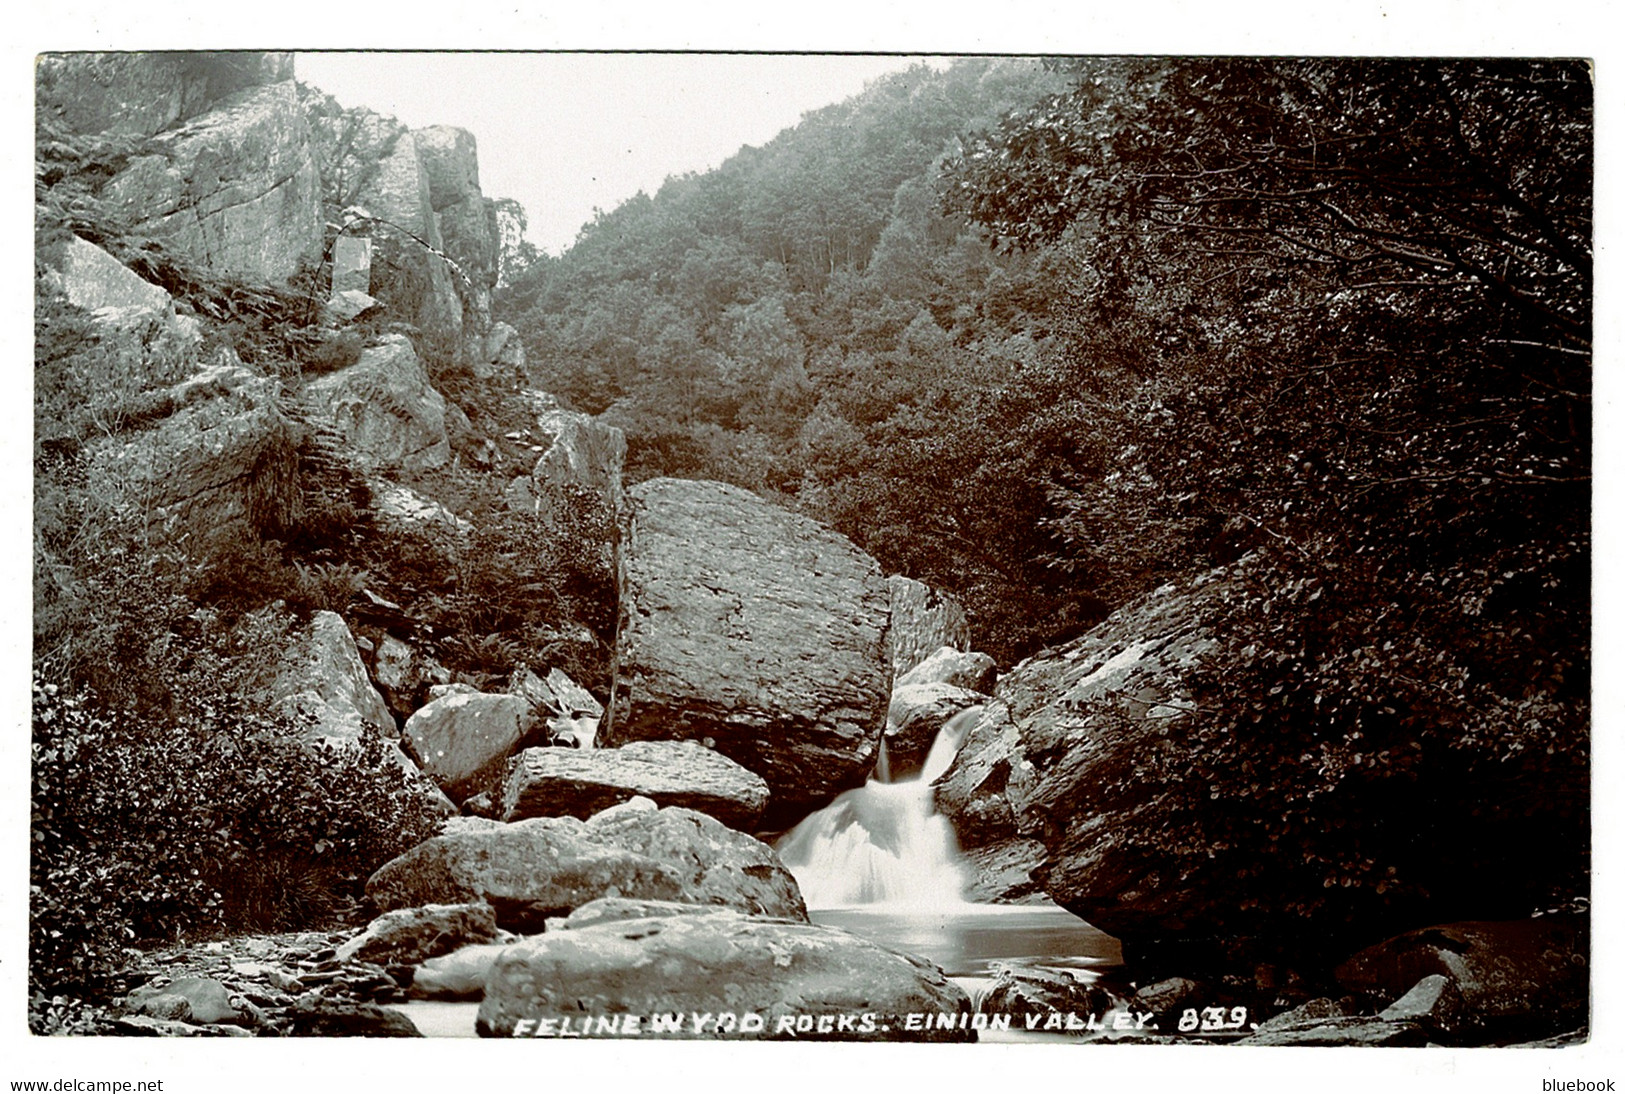 Ref 1402 - Early Real Photo Postcard - Feline Wydd Rocks - Einion Valley Wales - Unknown County